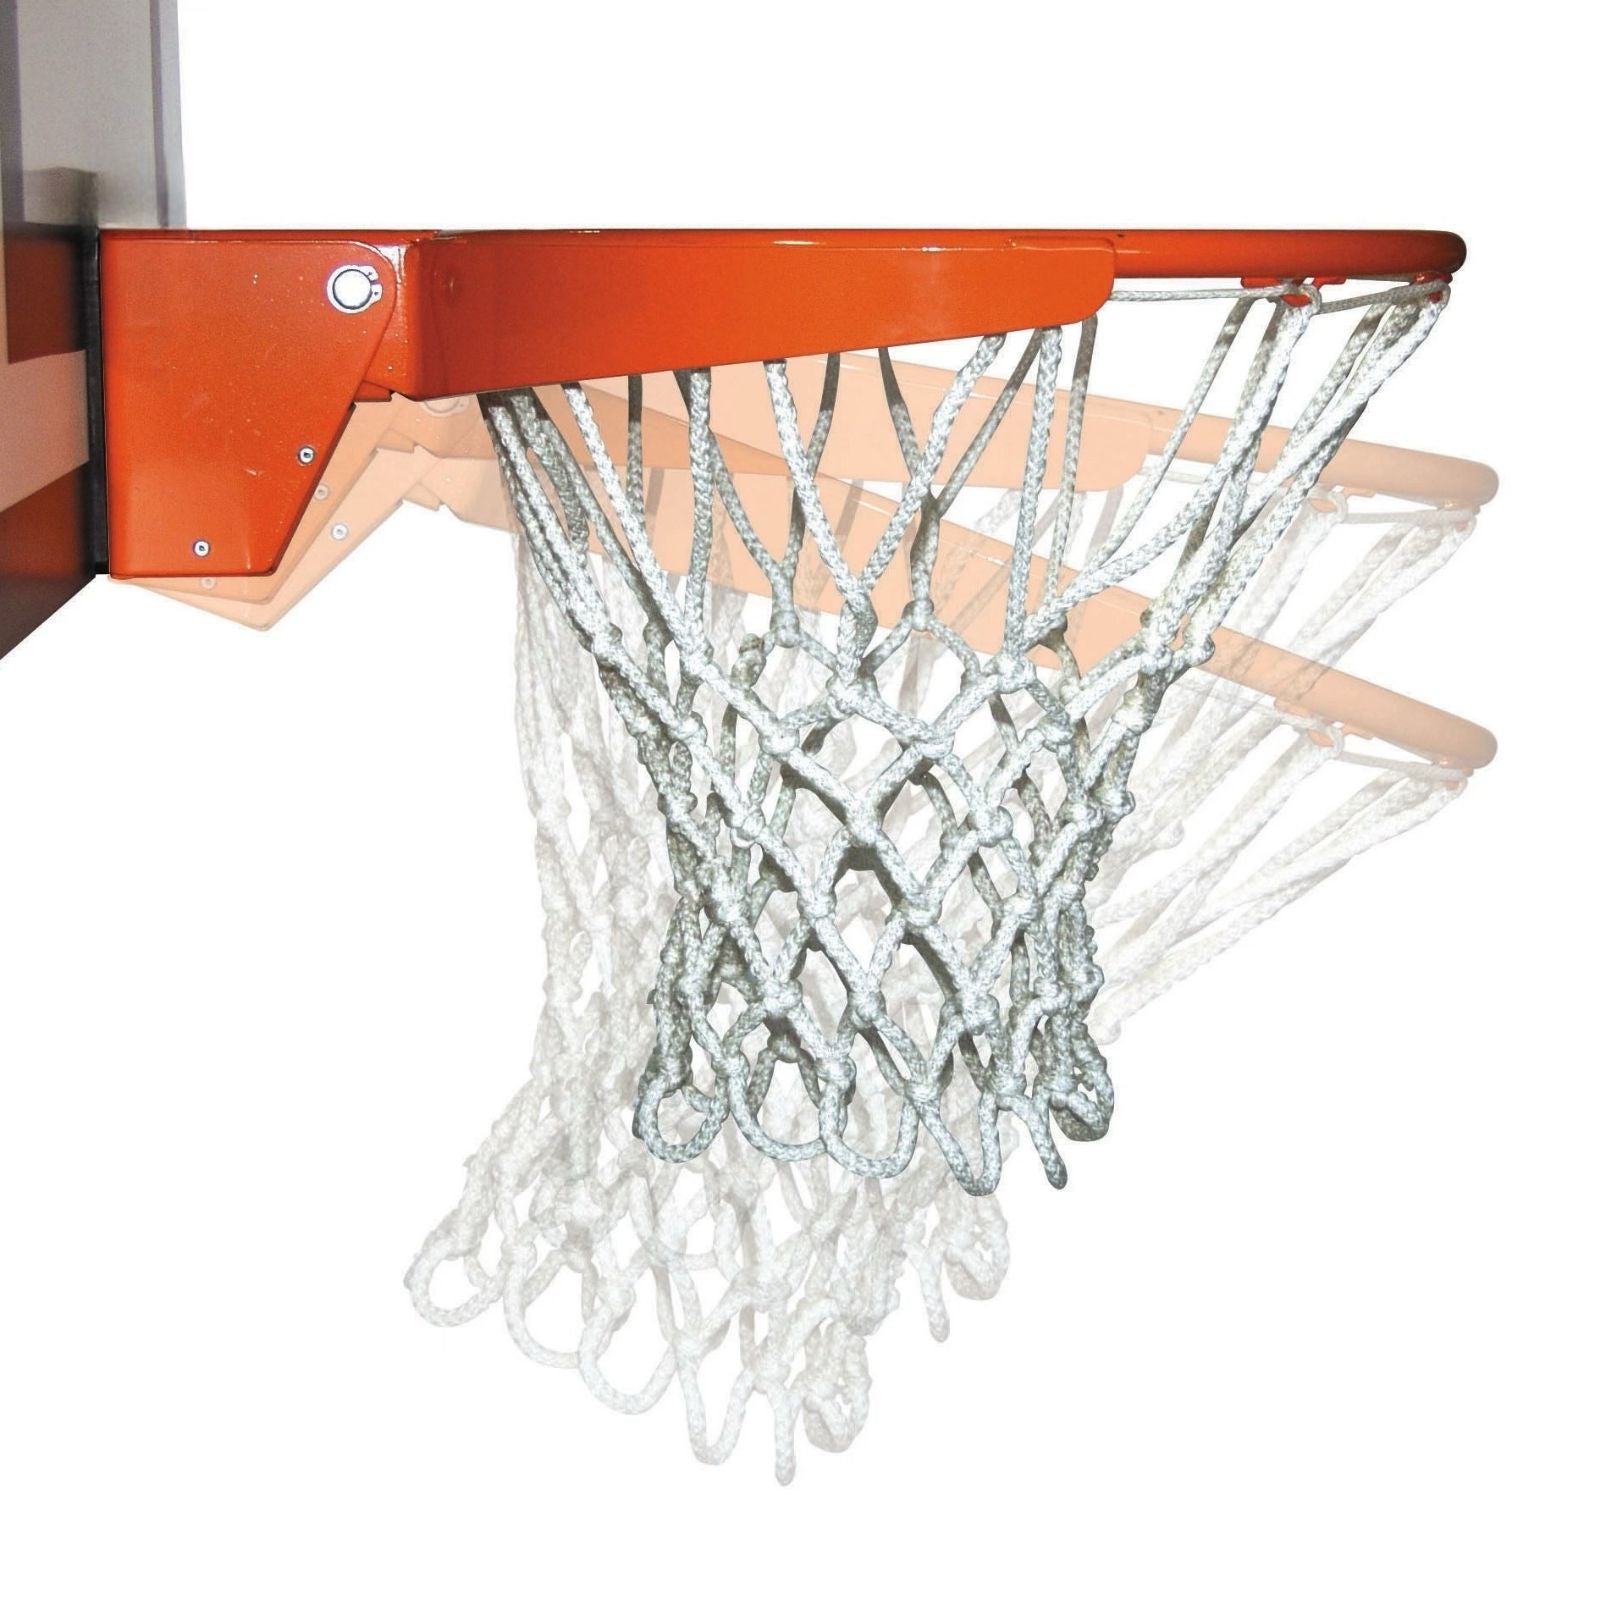 Canestro Basket Regolamentare Reclinabile